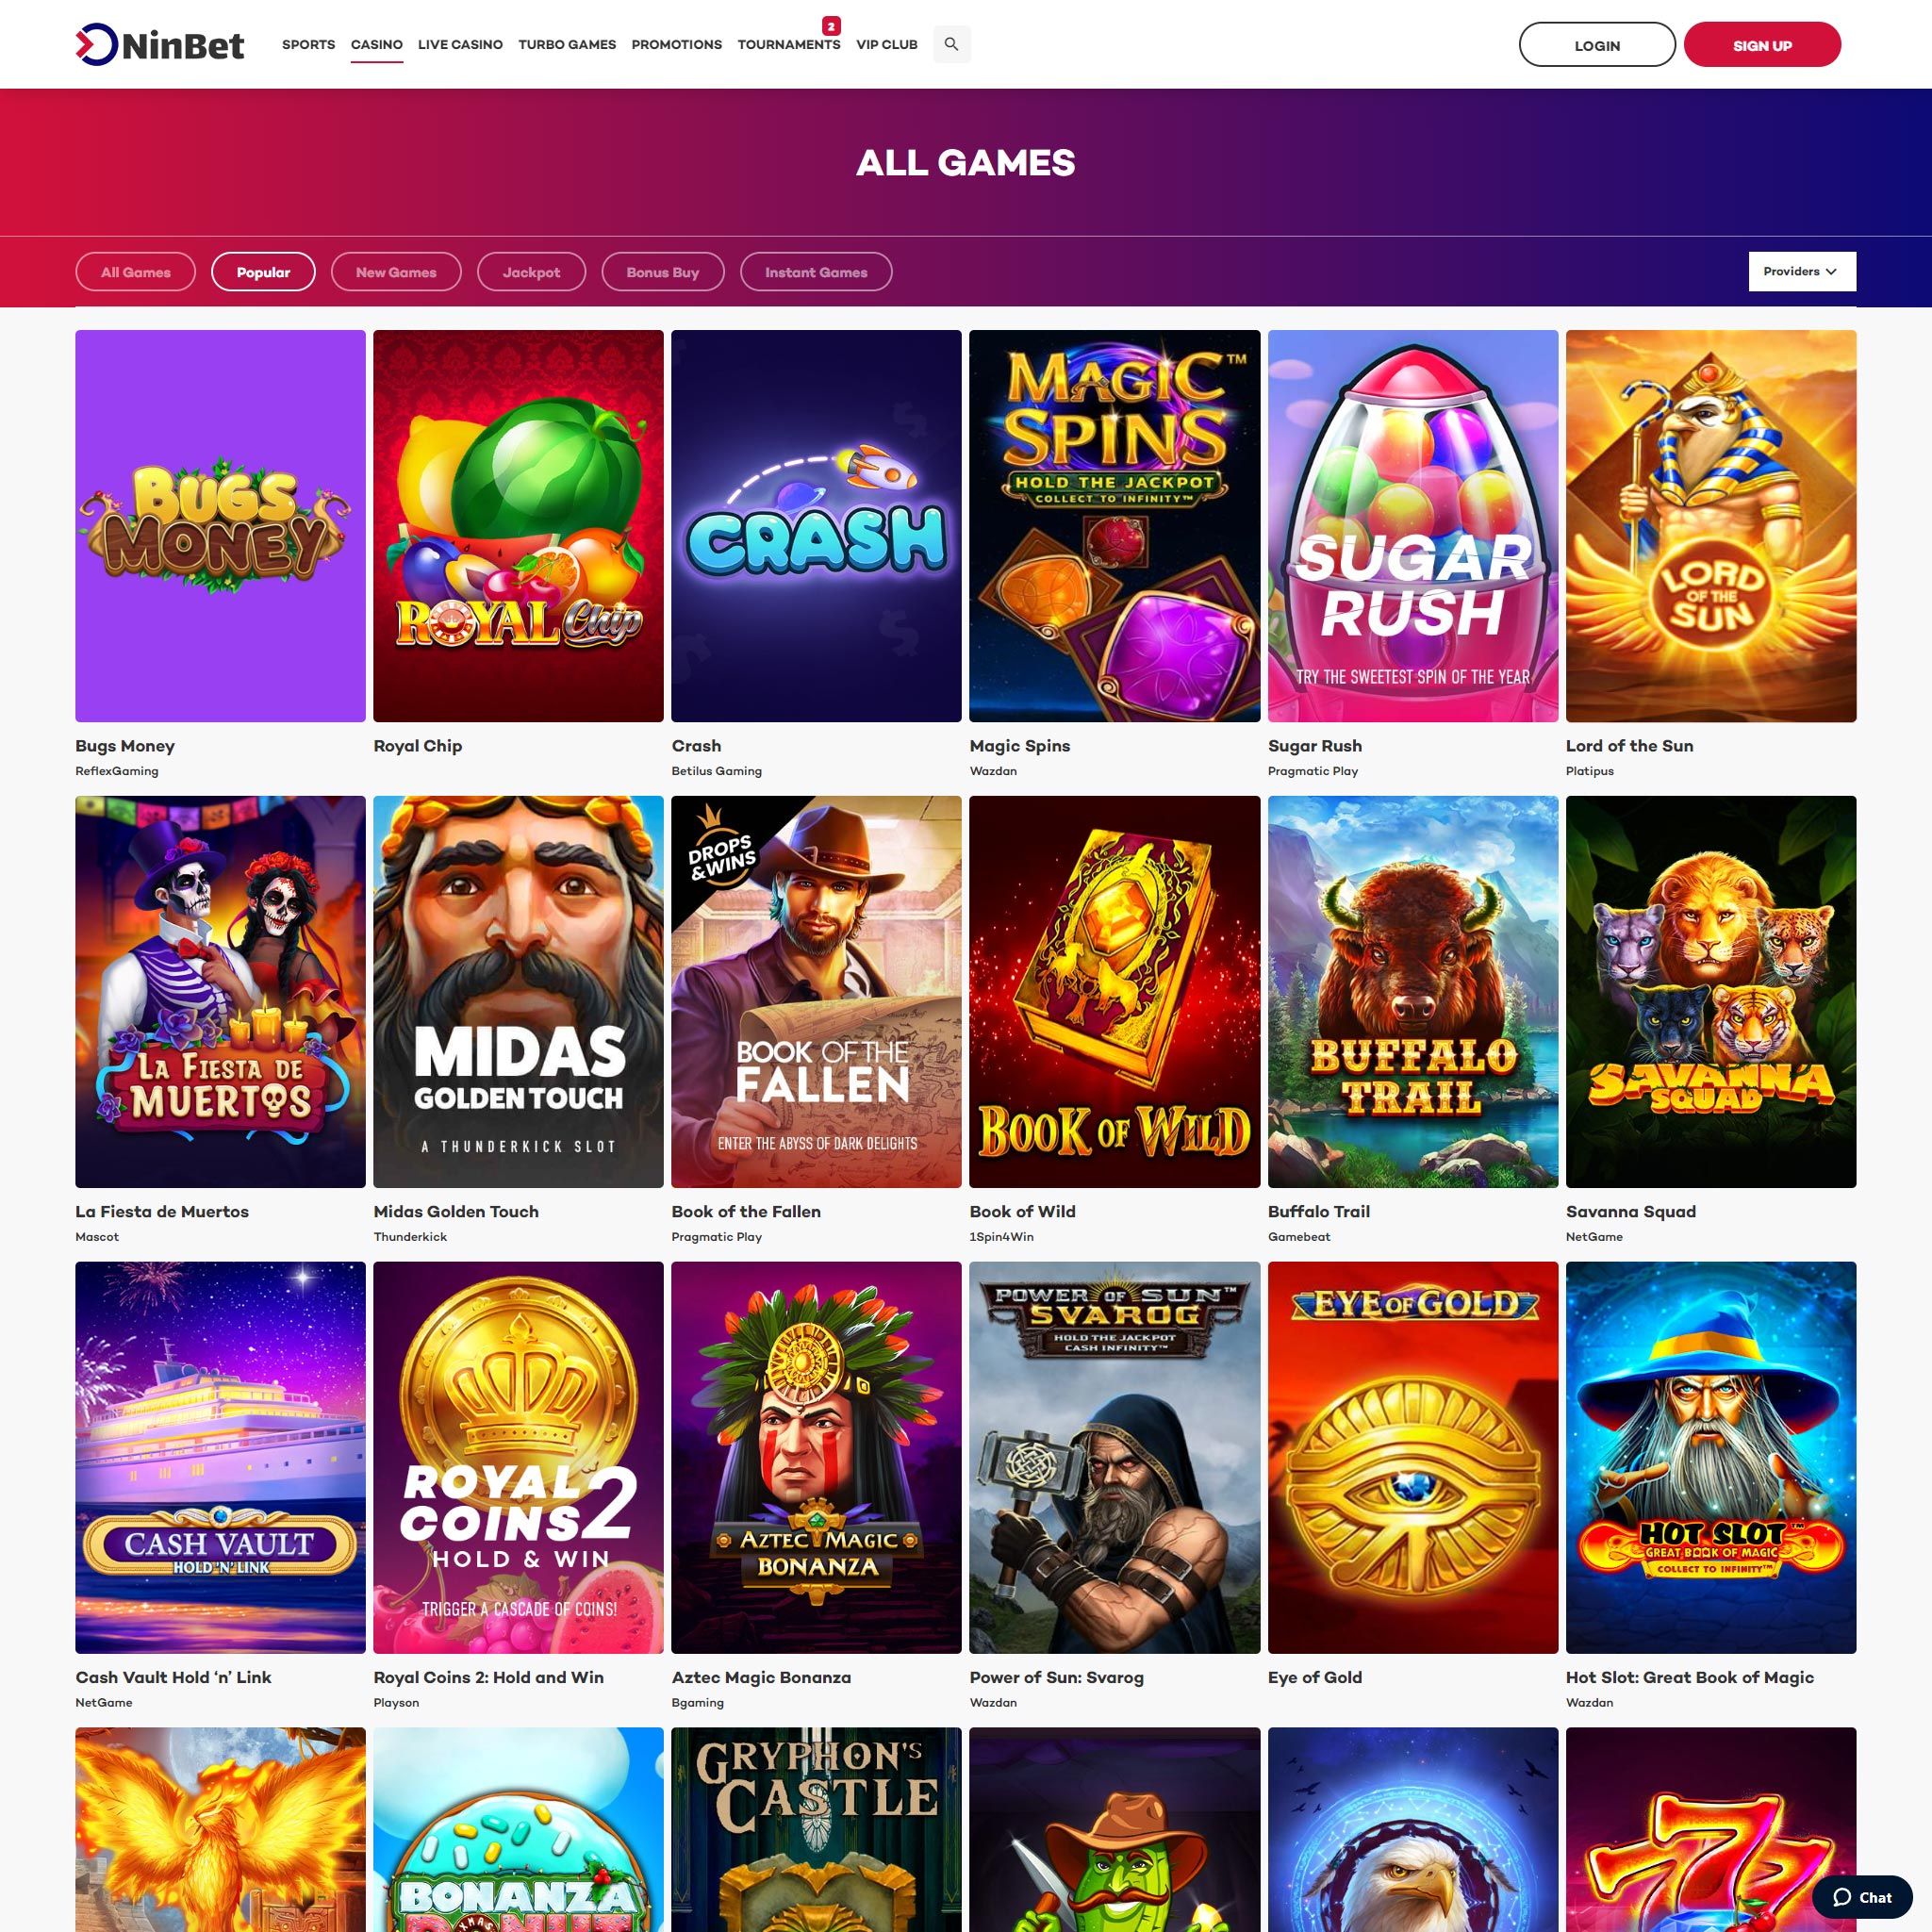 NinBet Casino full games catalogue